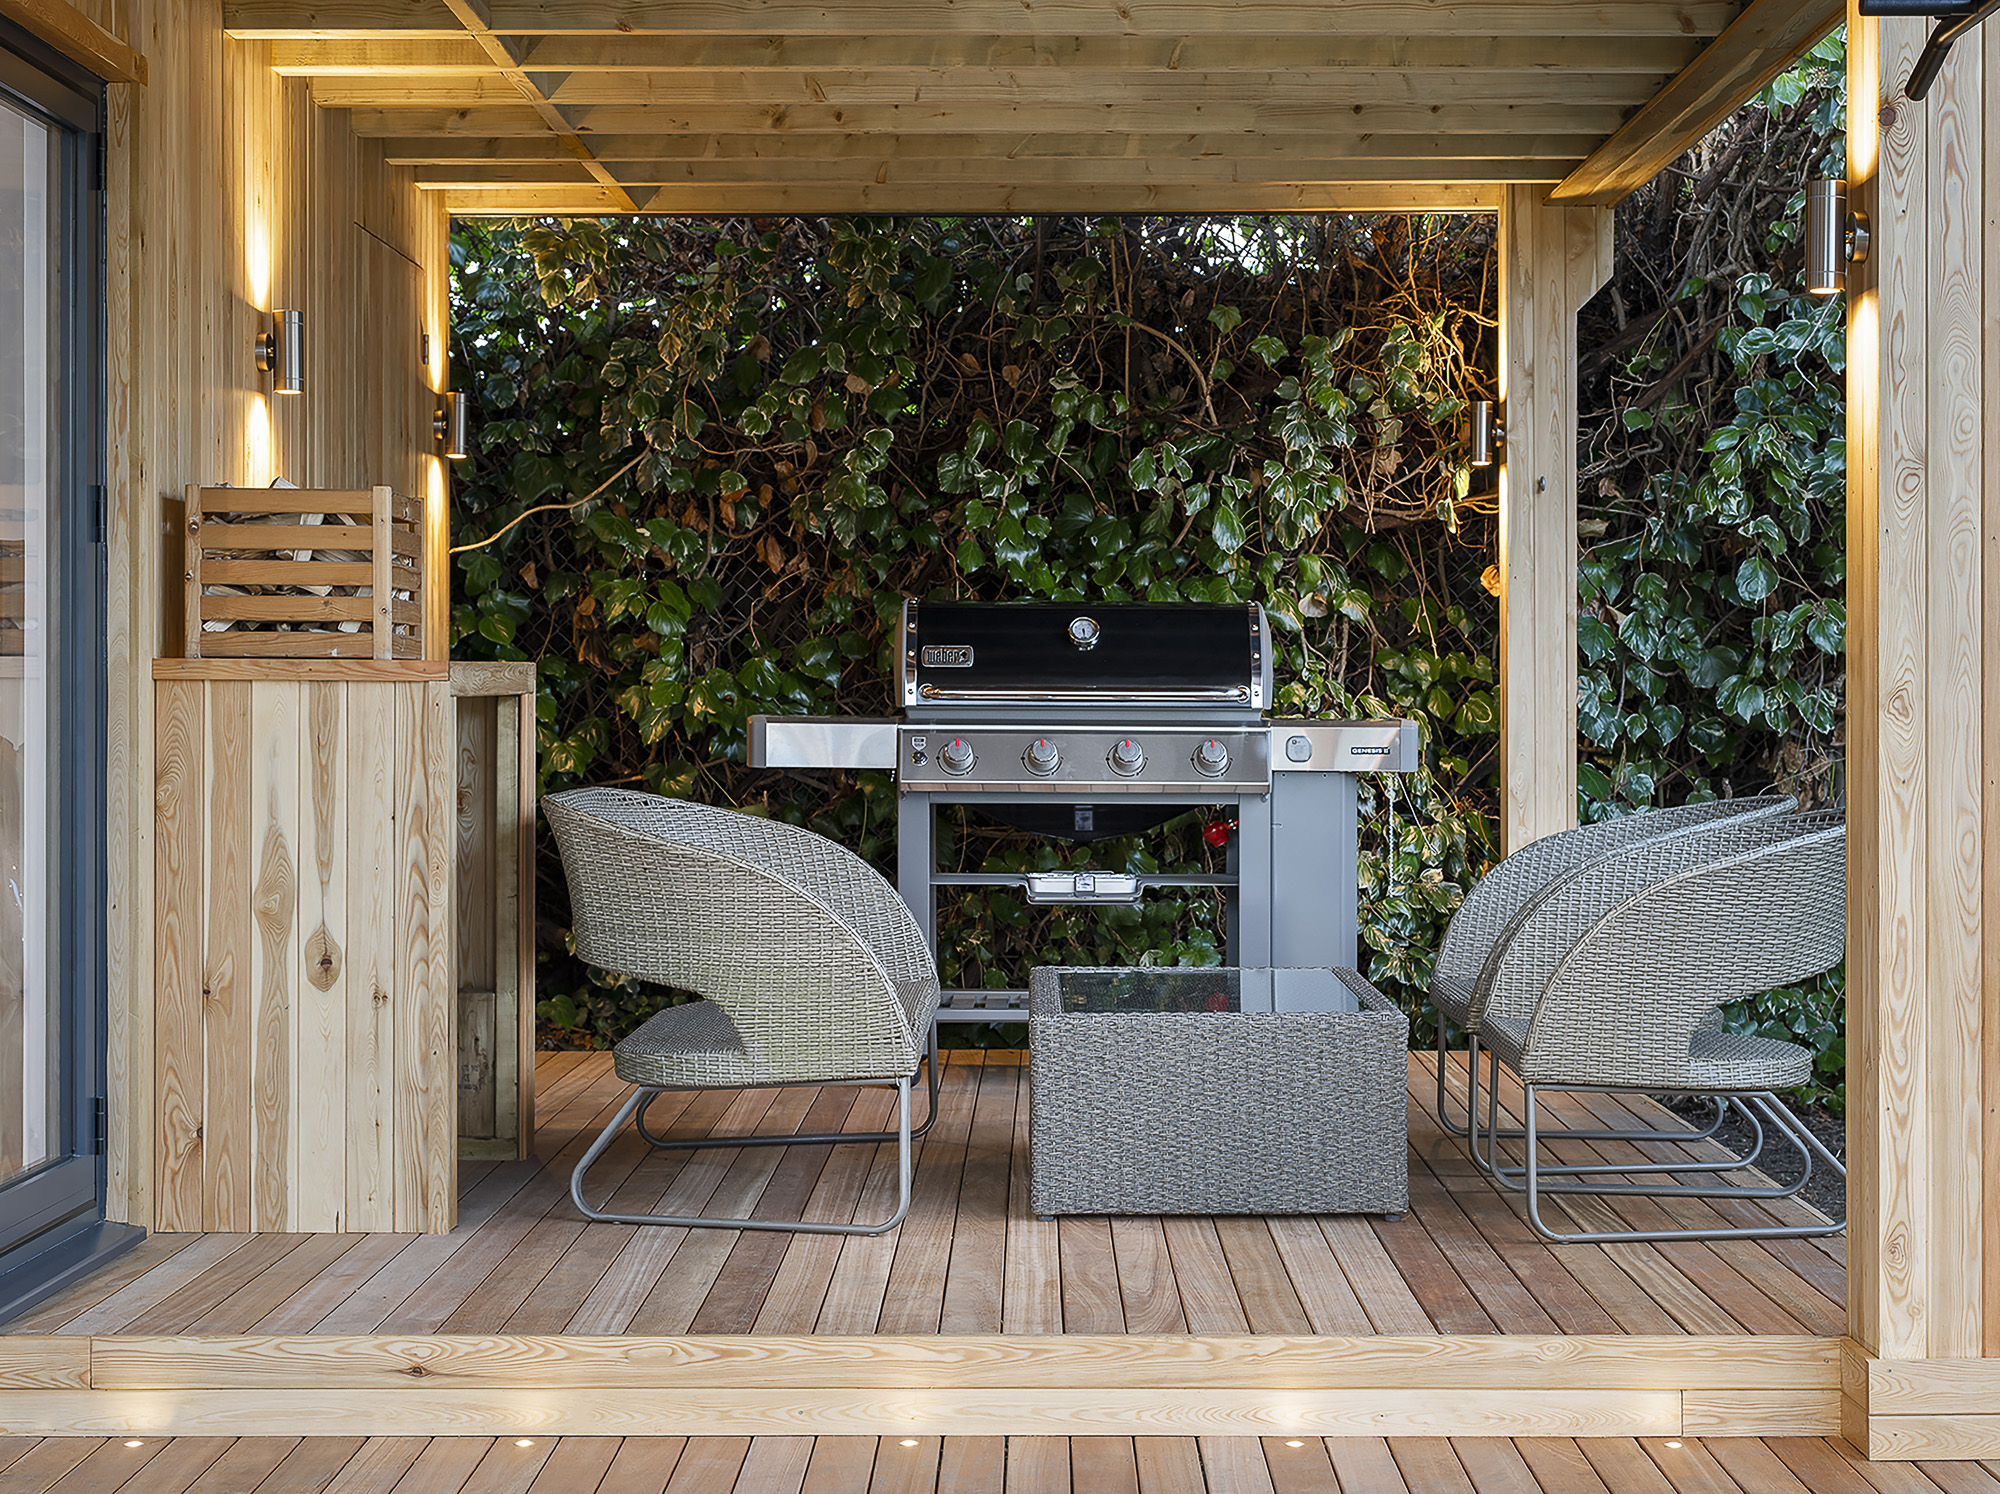 garden studio wellness centre in london wooden decking veranda